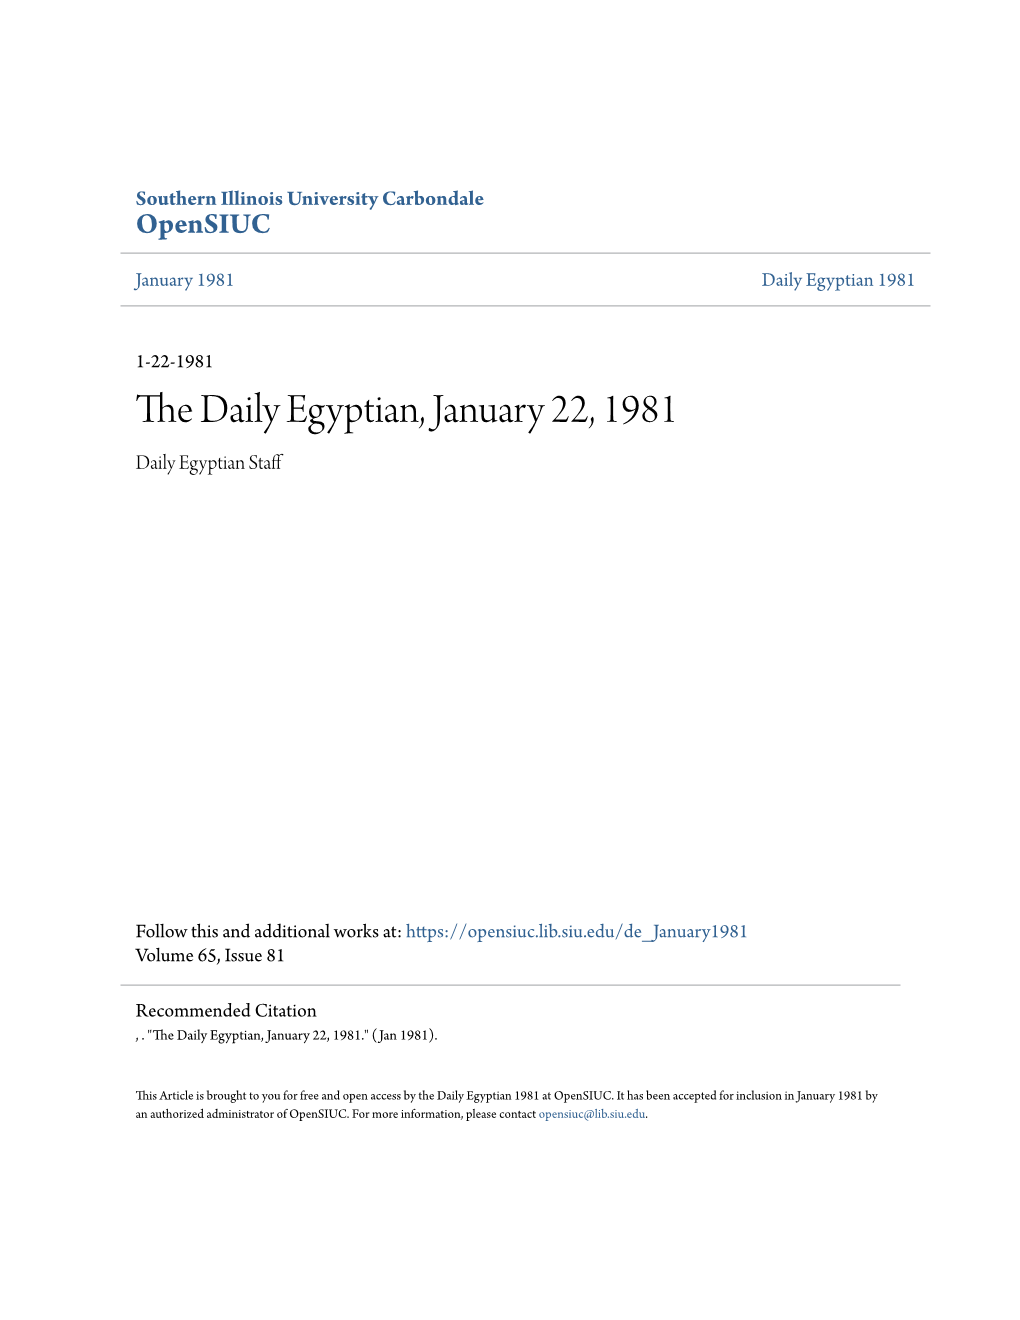 The Daily Egyptian, January 22, 1981